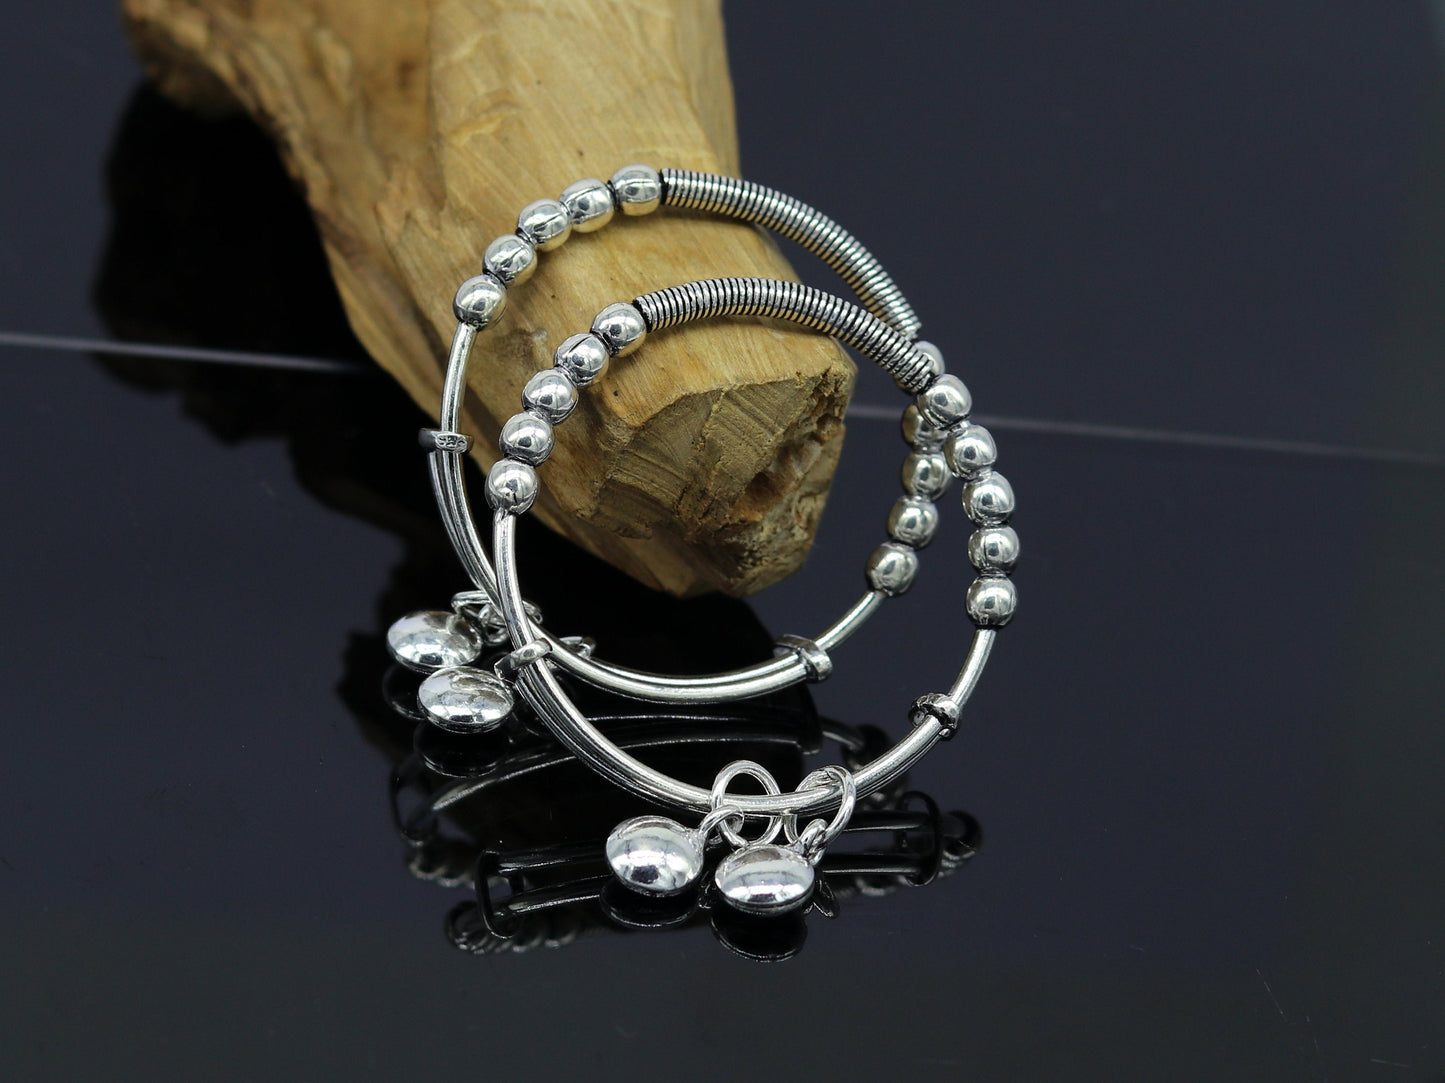 925 sterling silver handmade beaded design adjustable baby bangle bracelet, hangings charm bangles unisex personalized kids jewelry bbk75 - TRIBAL ORNAMENTS